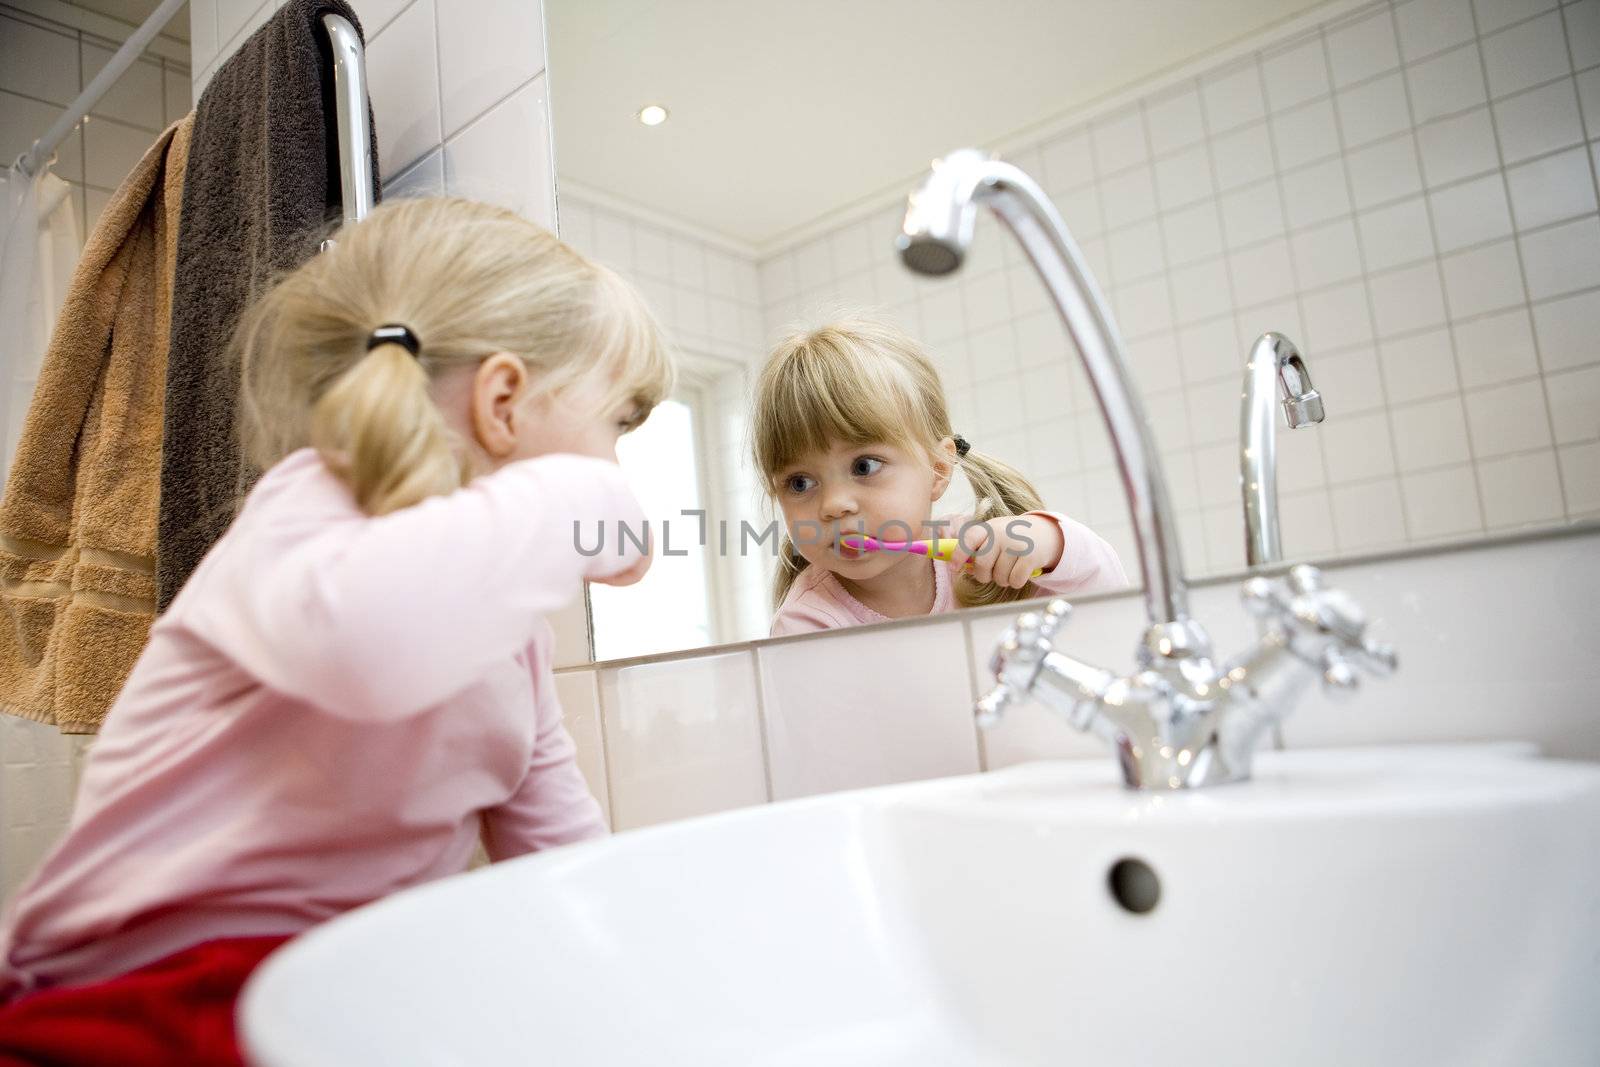 Baby Brushing teeth by gemenacom